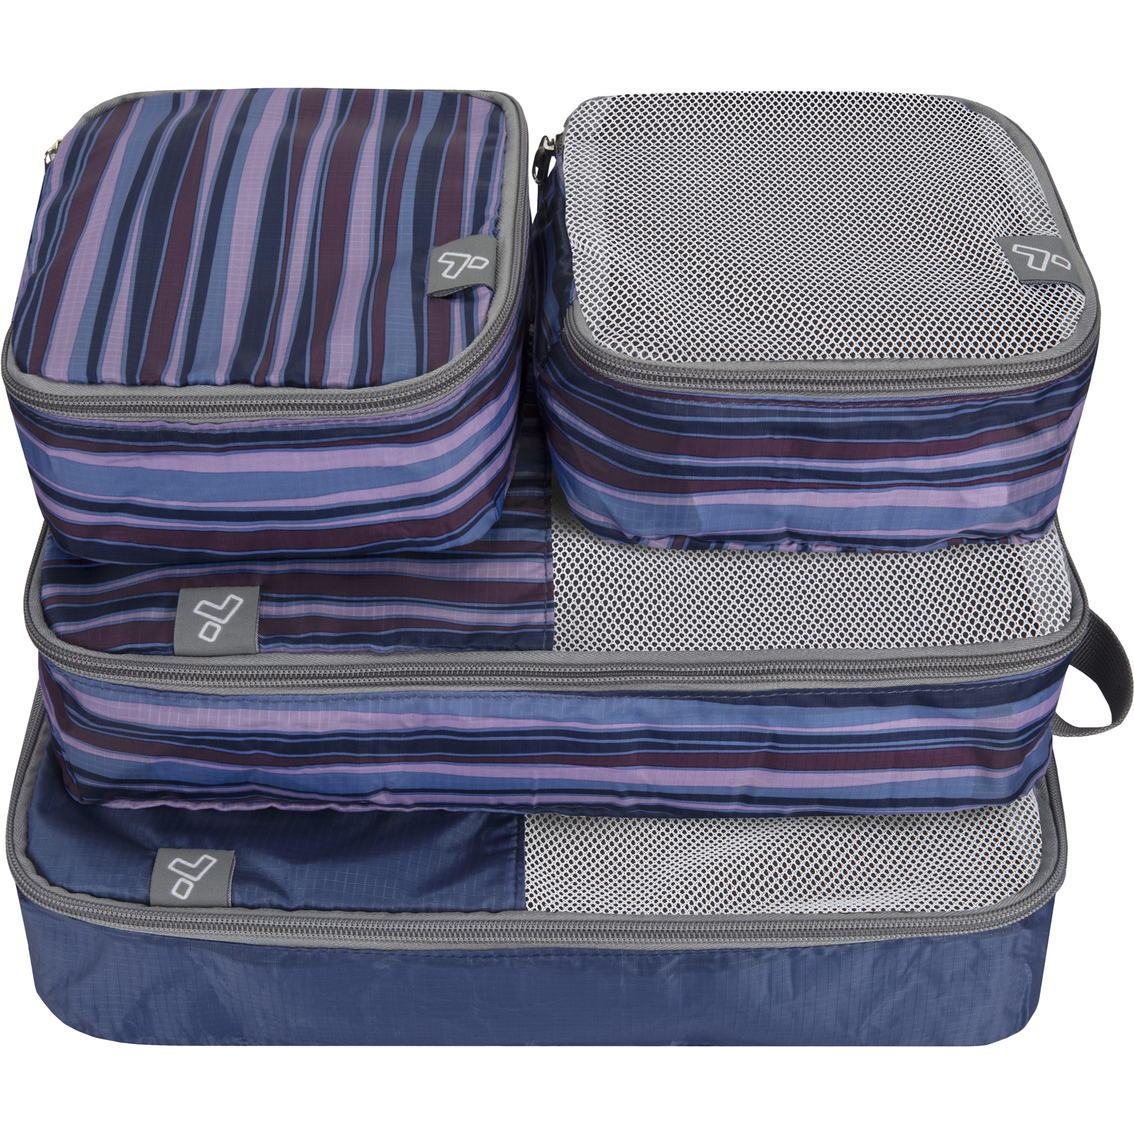 Travelon Soft Packing Organizers 4 pk. - Image 1 of 2